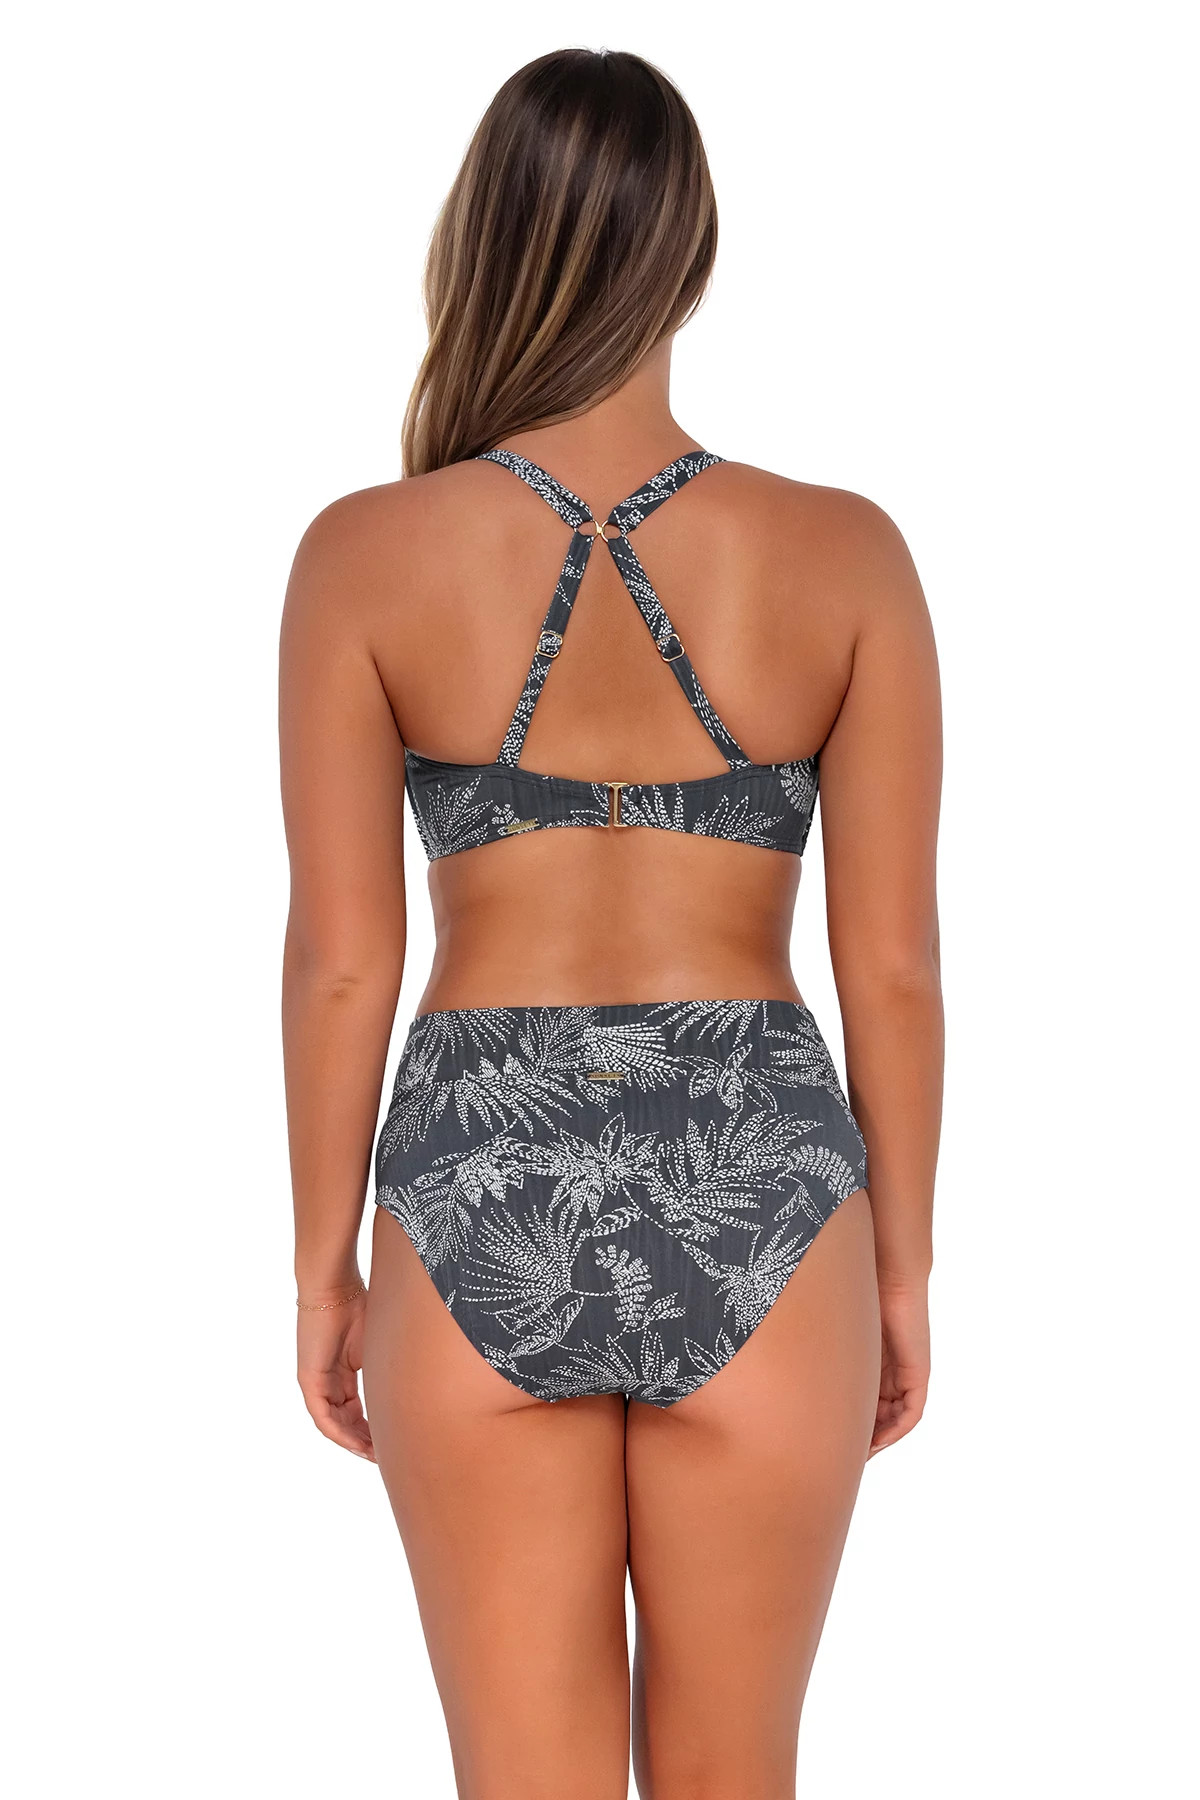 FANFARE SEAGRASS TEXTURE Taylor Underwire Bralette Bikini Top (E-H Cup) image number 3